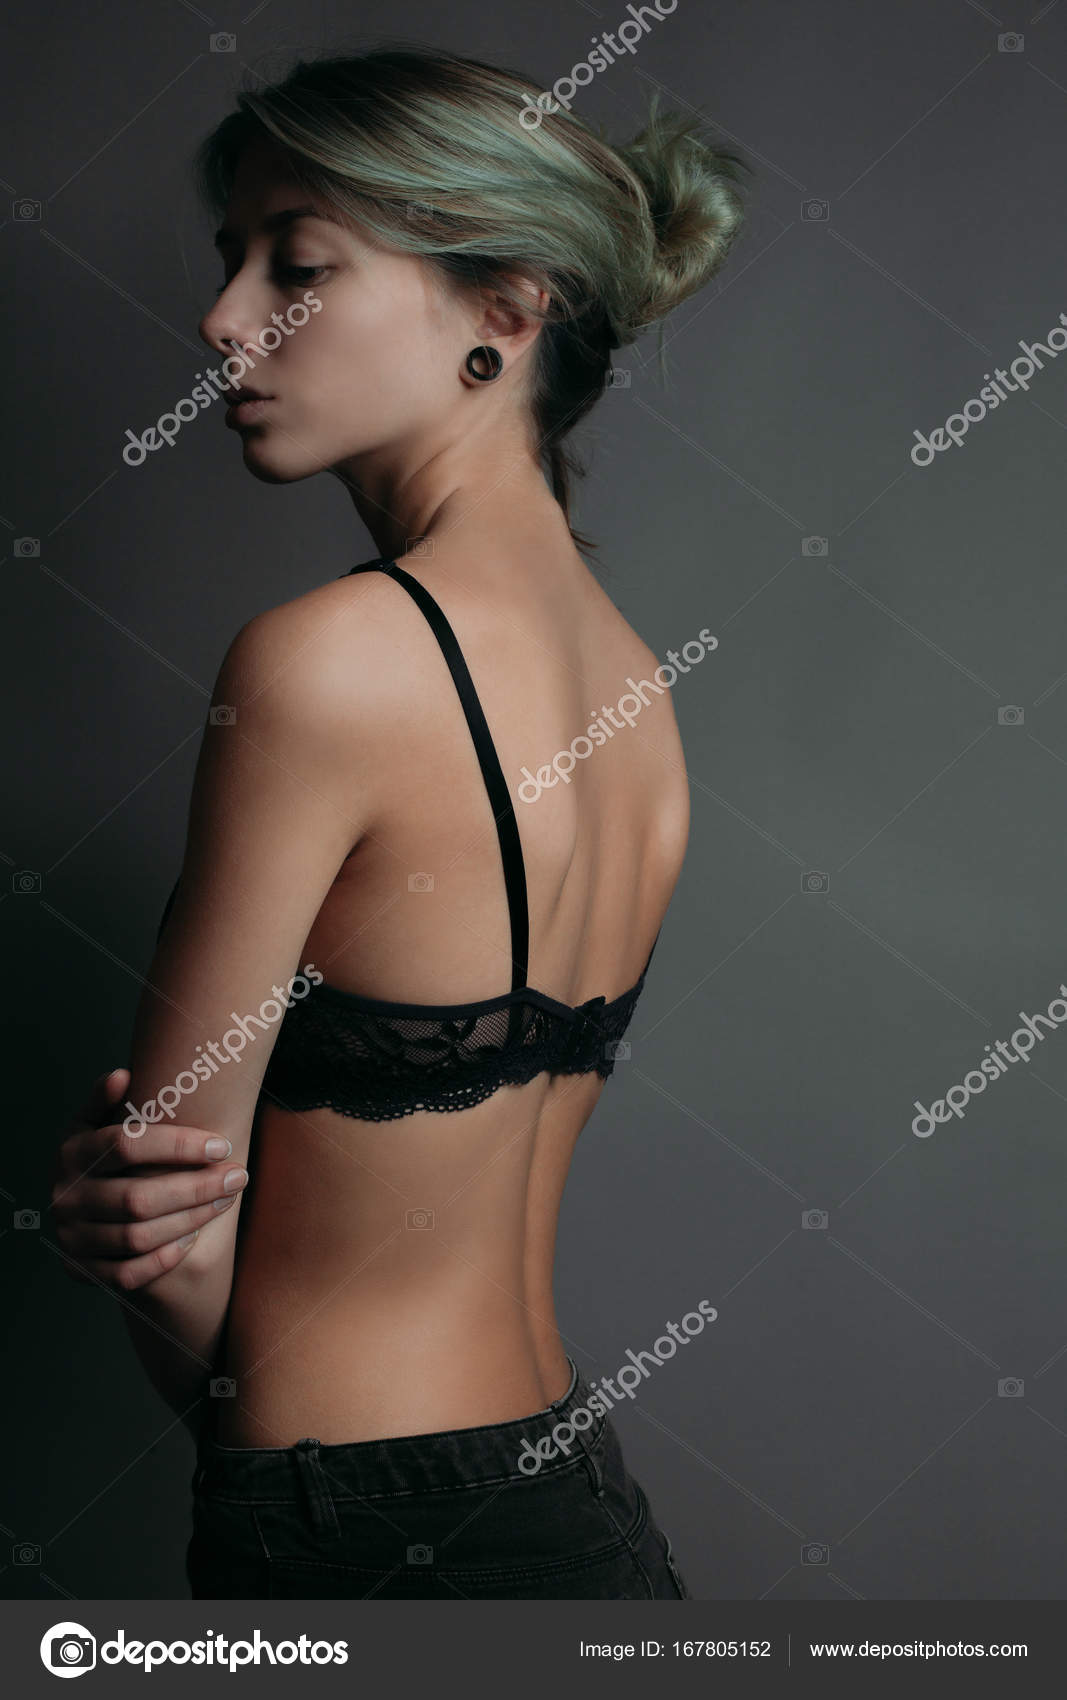 https://st3.depositphotos.com/13369764/16780/i/1600/depositphotos_167805152-stock-photo-attractive-girl-in-bra.jpg